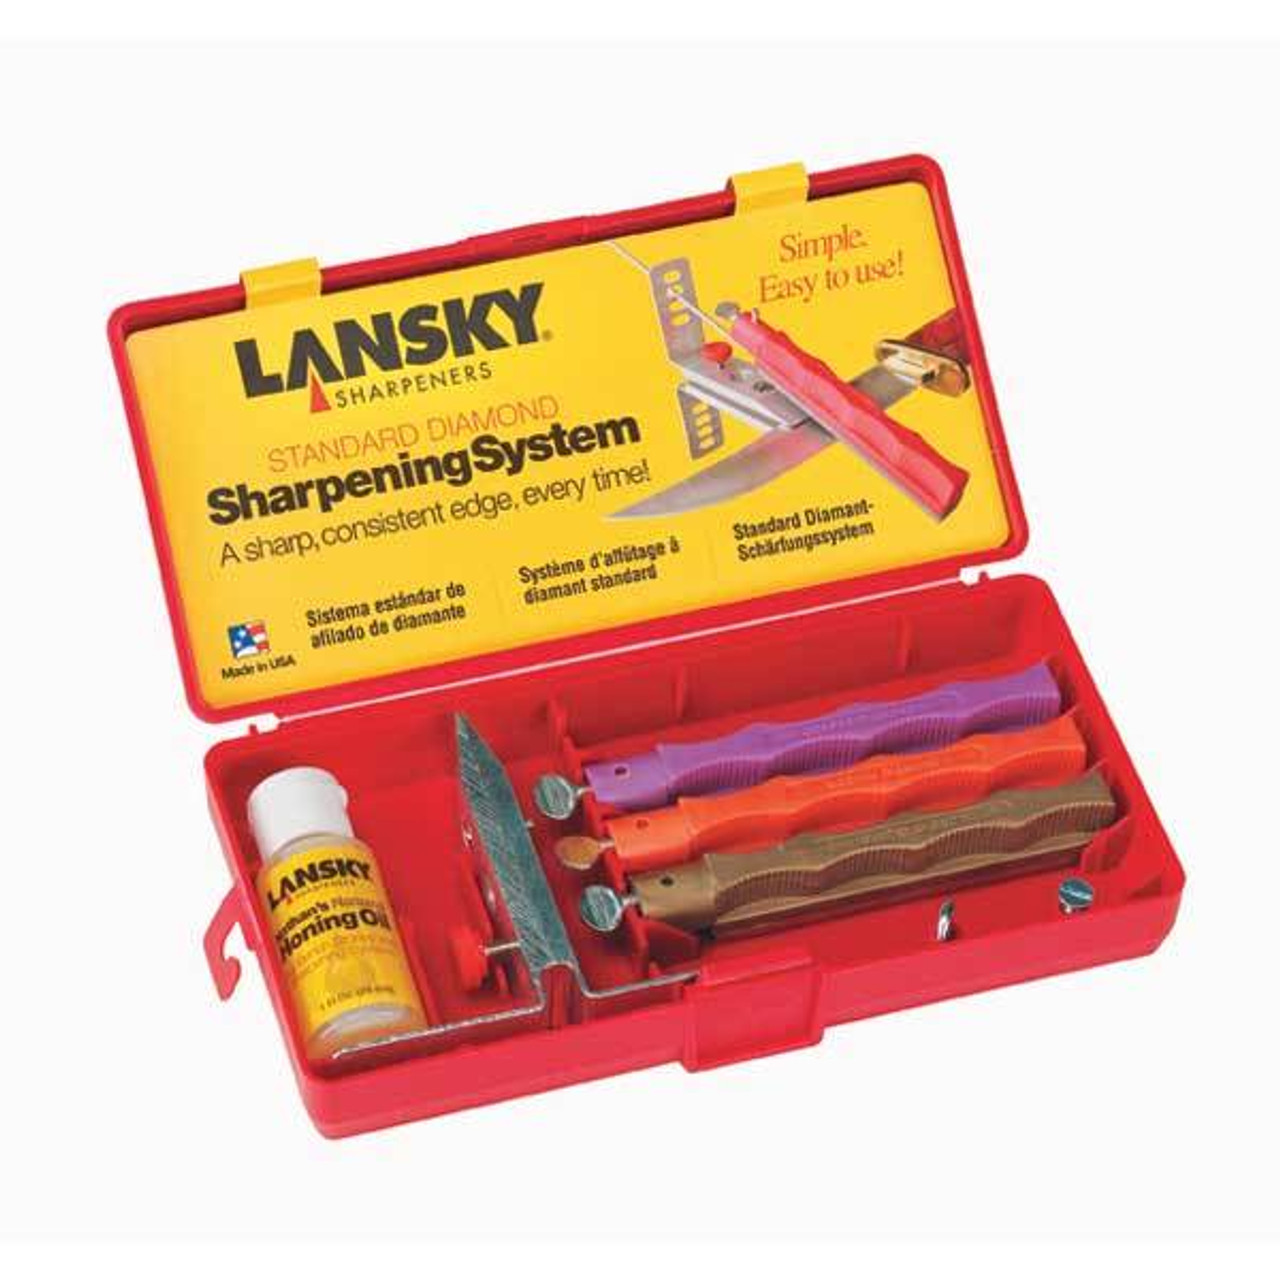 Lansky Knife Controlled Angle Sharpening System 3 STONES COARSE MEDIUM FINE